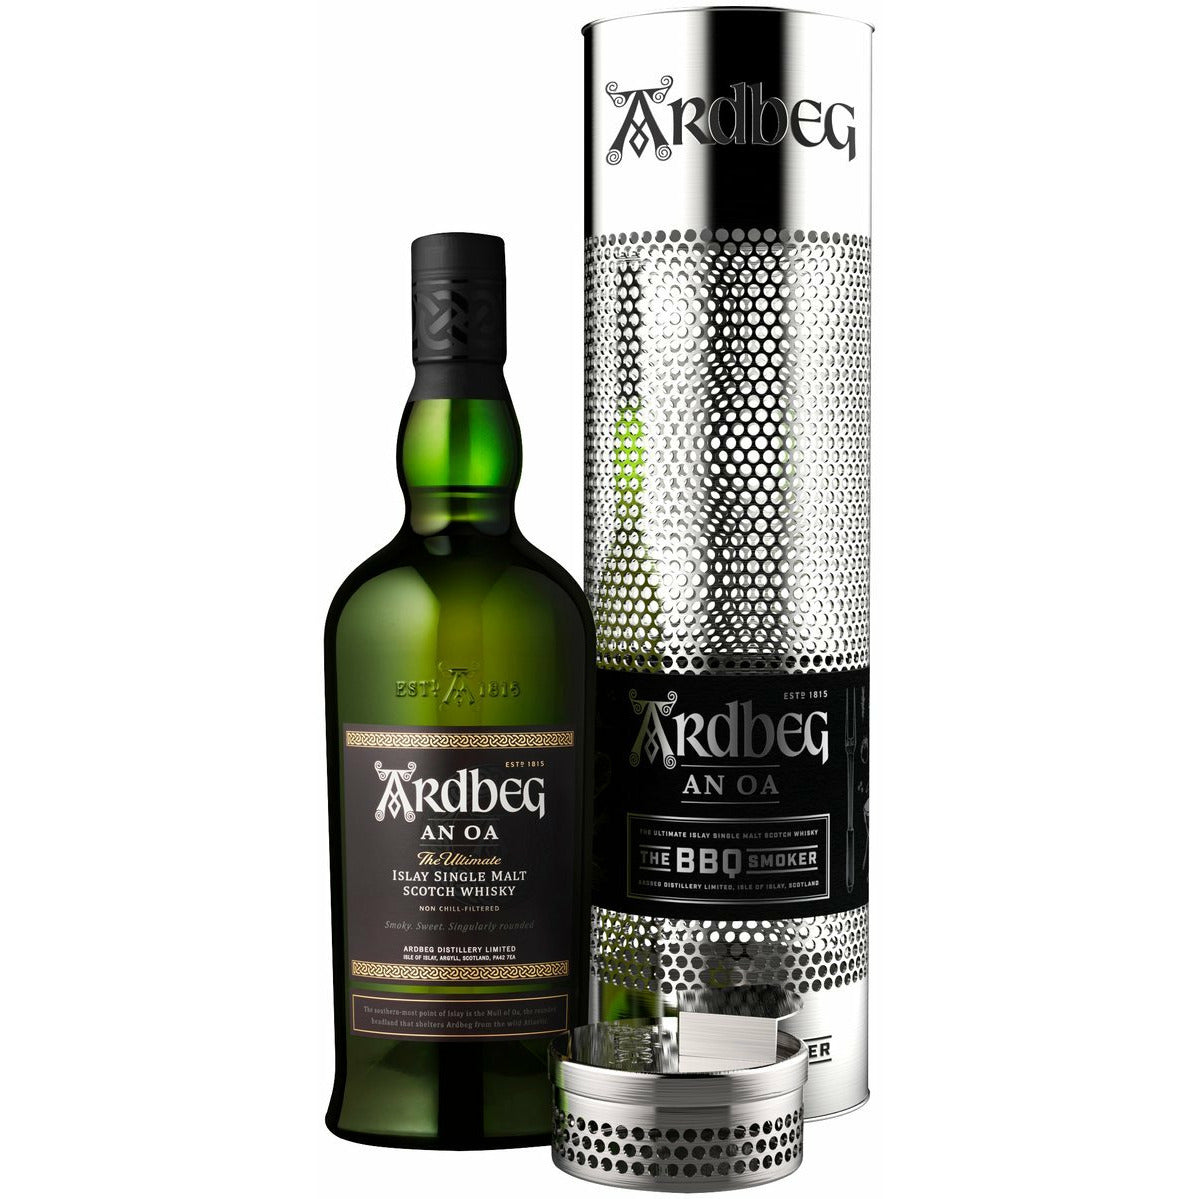 Ardbeg AN OA Islay Single Malt Scotch Whisky 46,6% Vol. 0,7l in Giftbox with BBQ Smoker